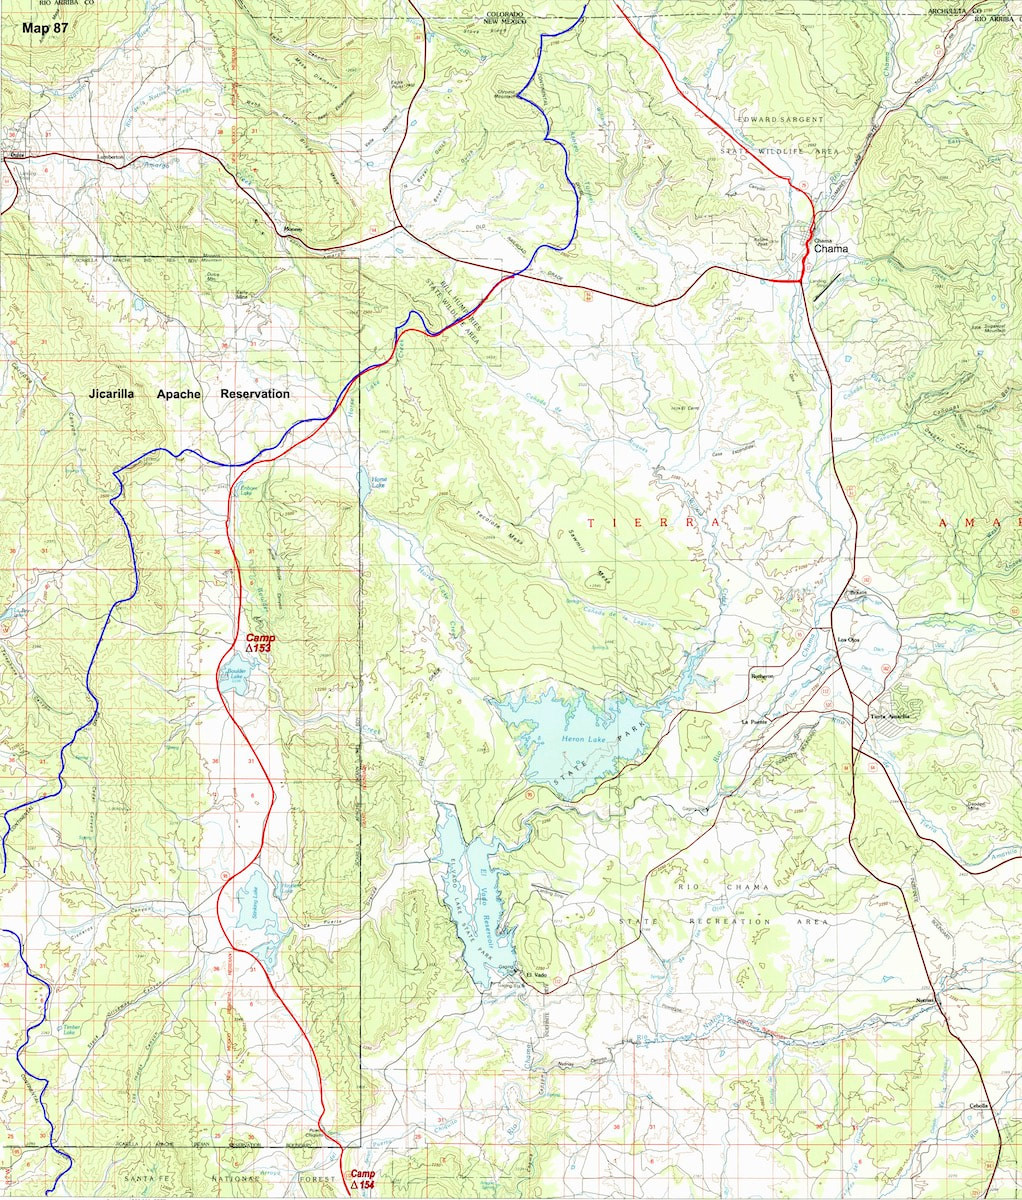 CDT Map 87